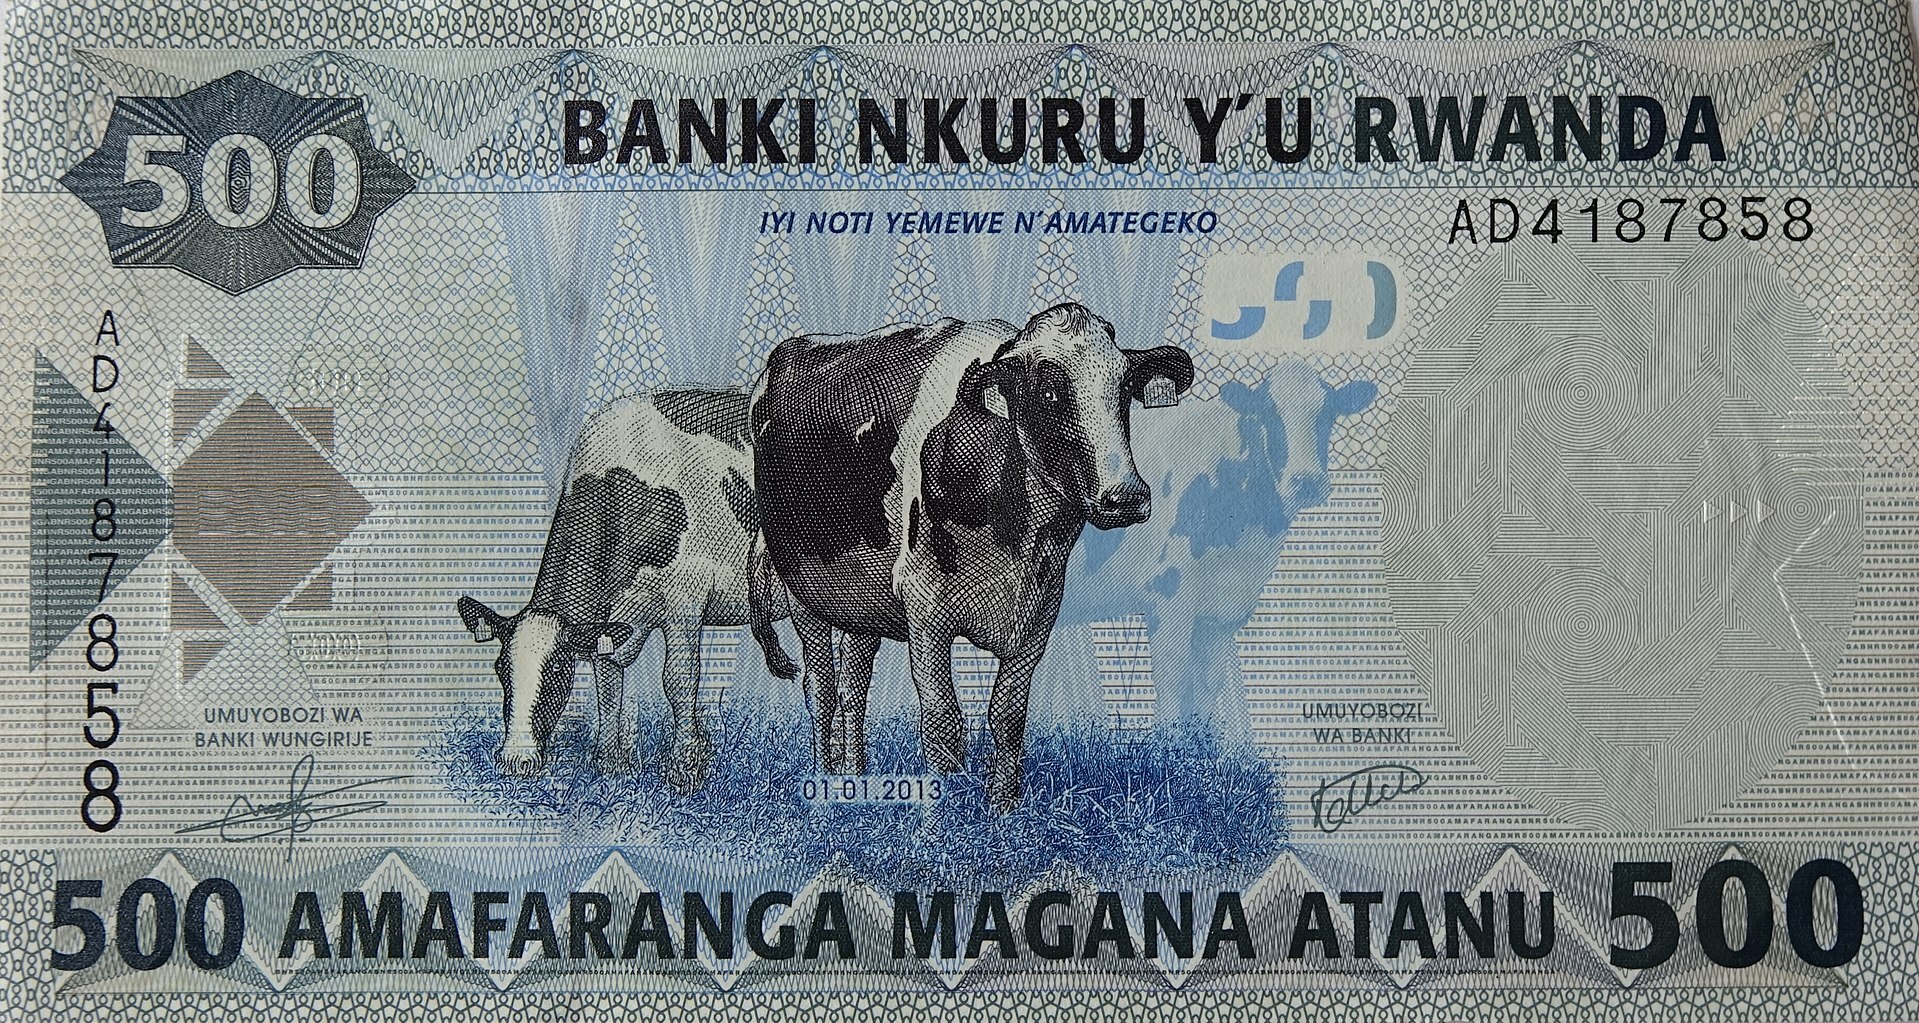 rwanda banknote 500 francs reverse.jpg